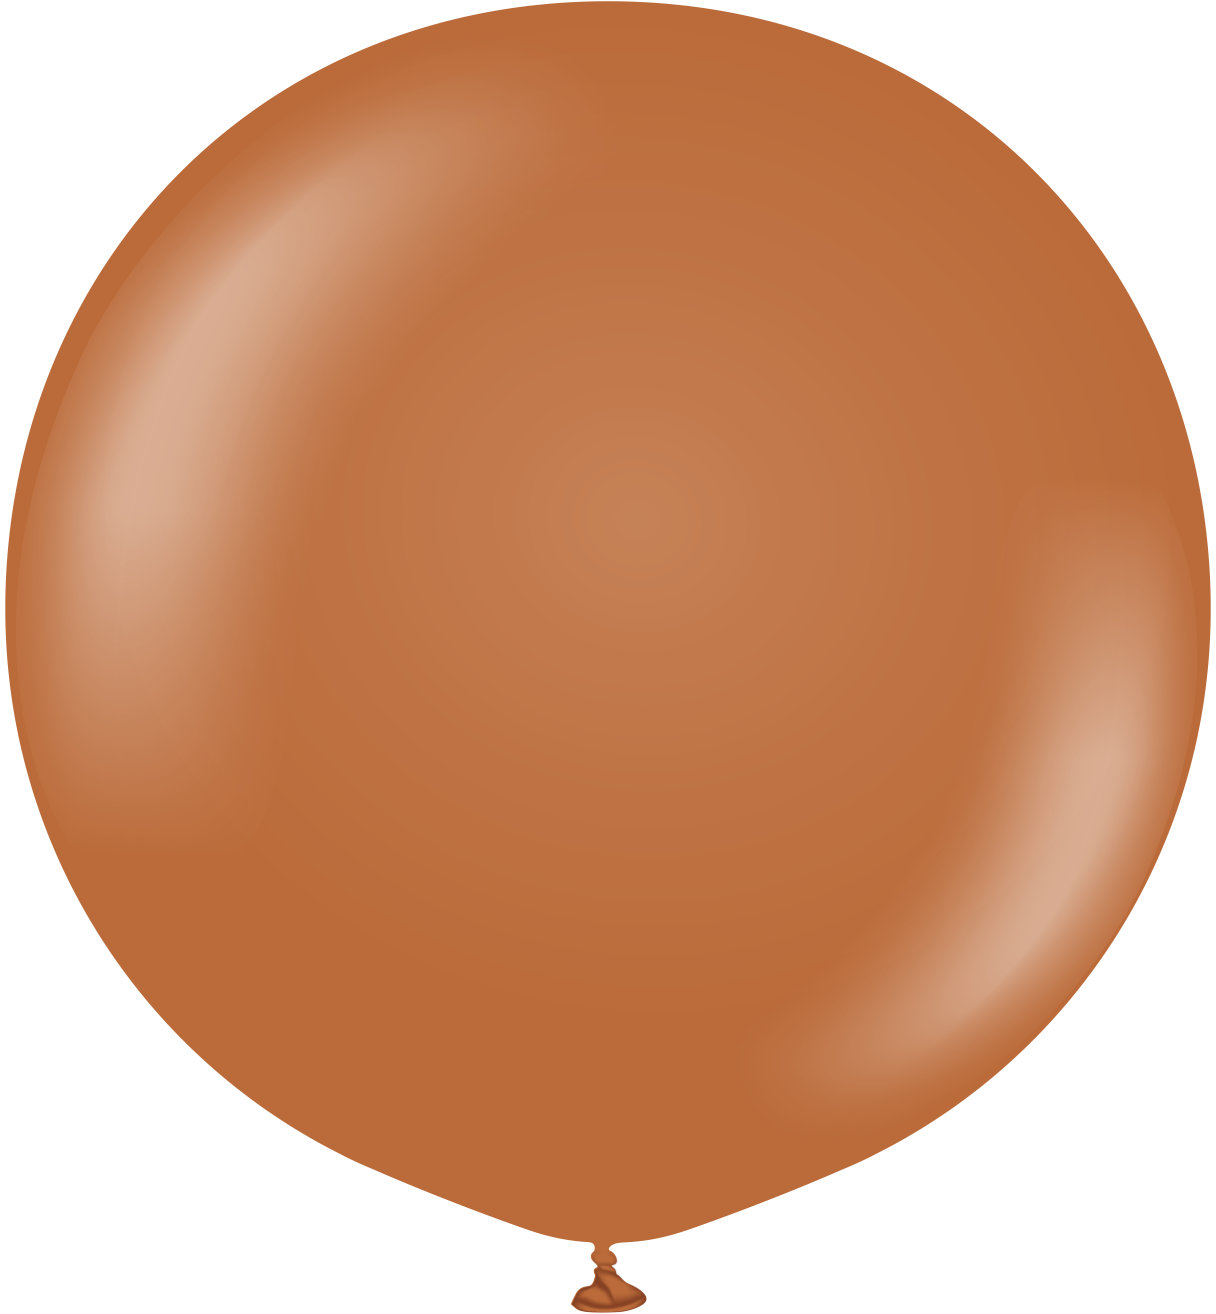 24" Kalisan Latex Balloons Standard Caramel Brown (5 Per Bag)